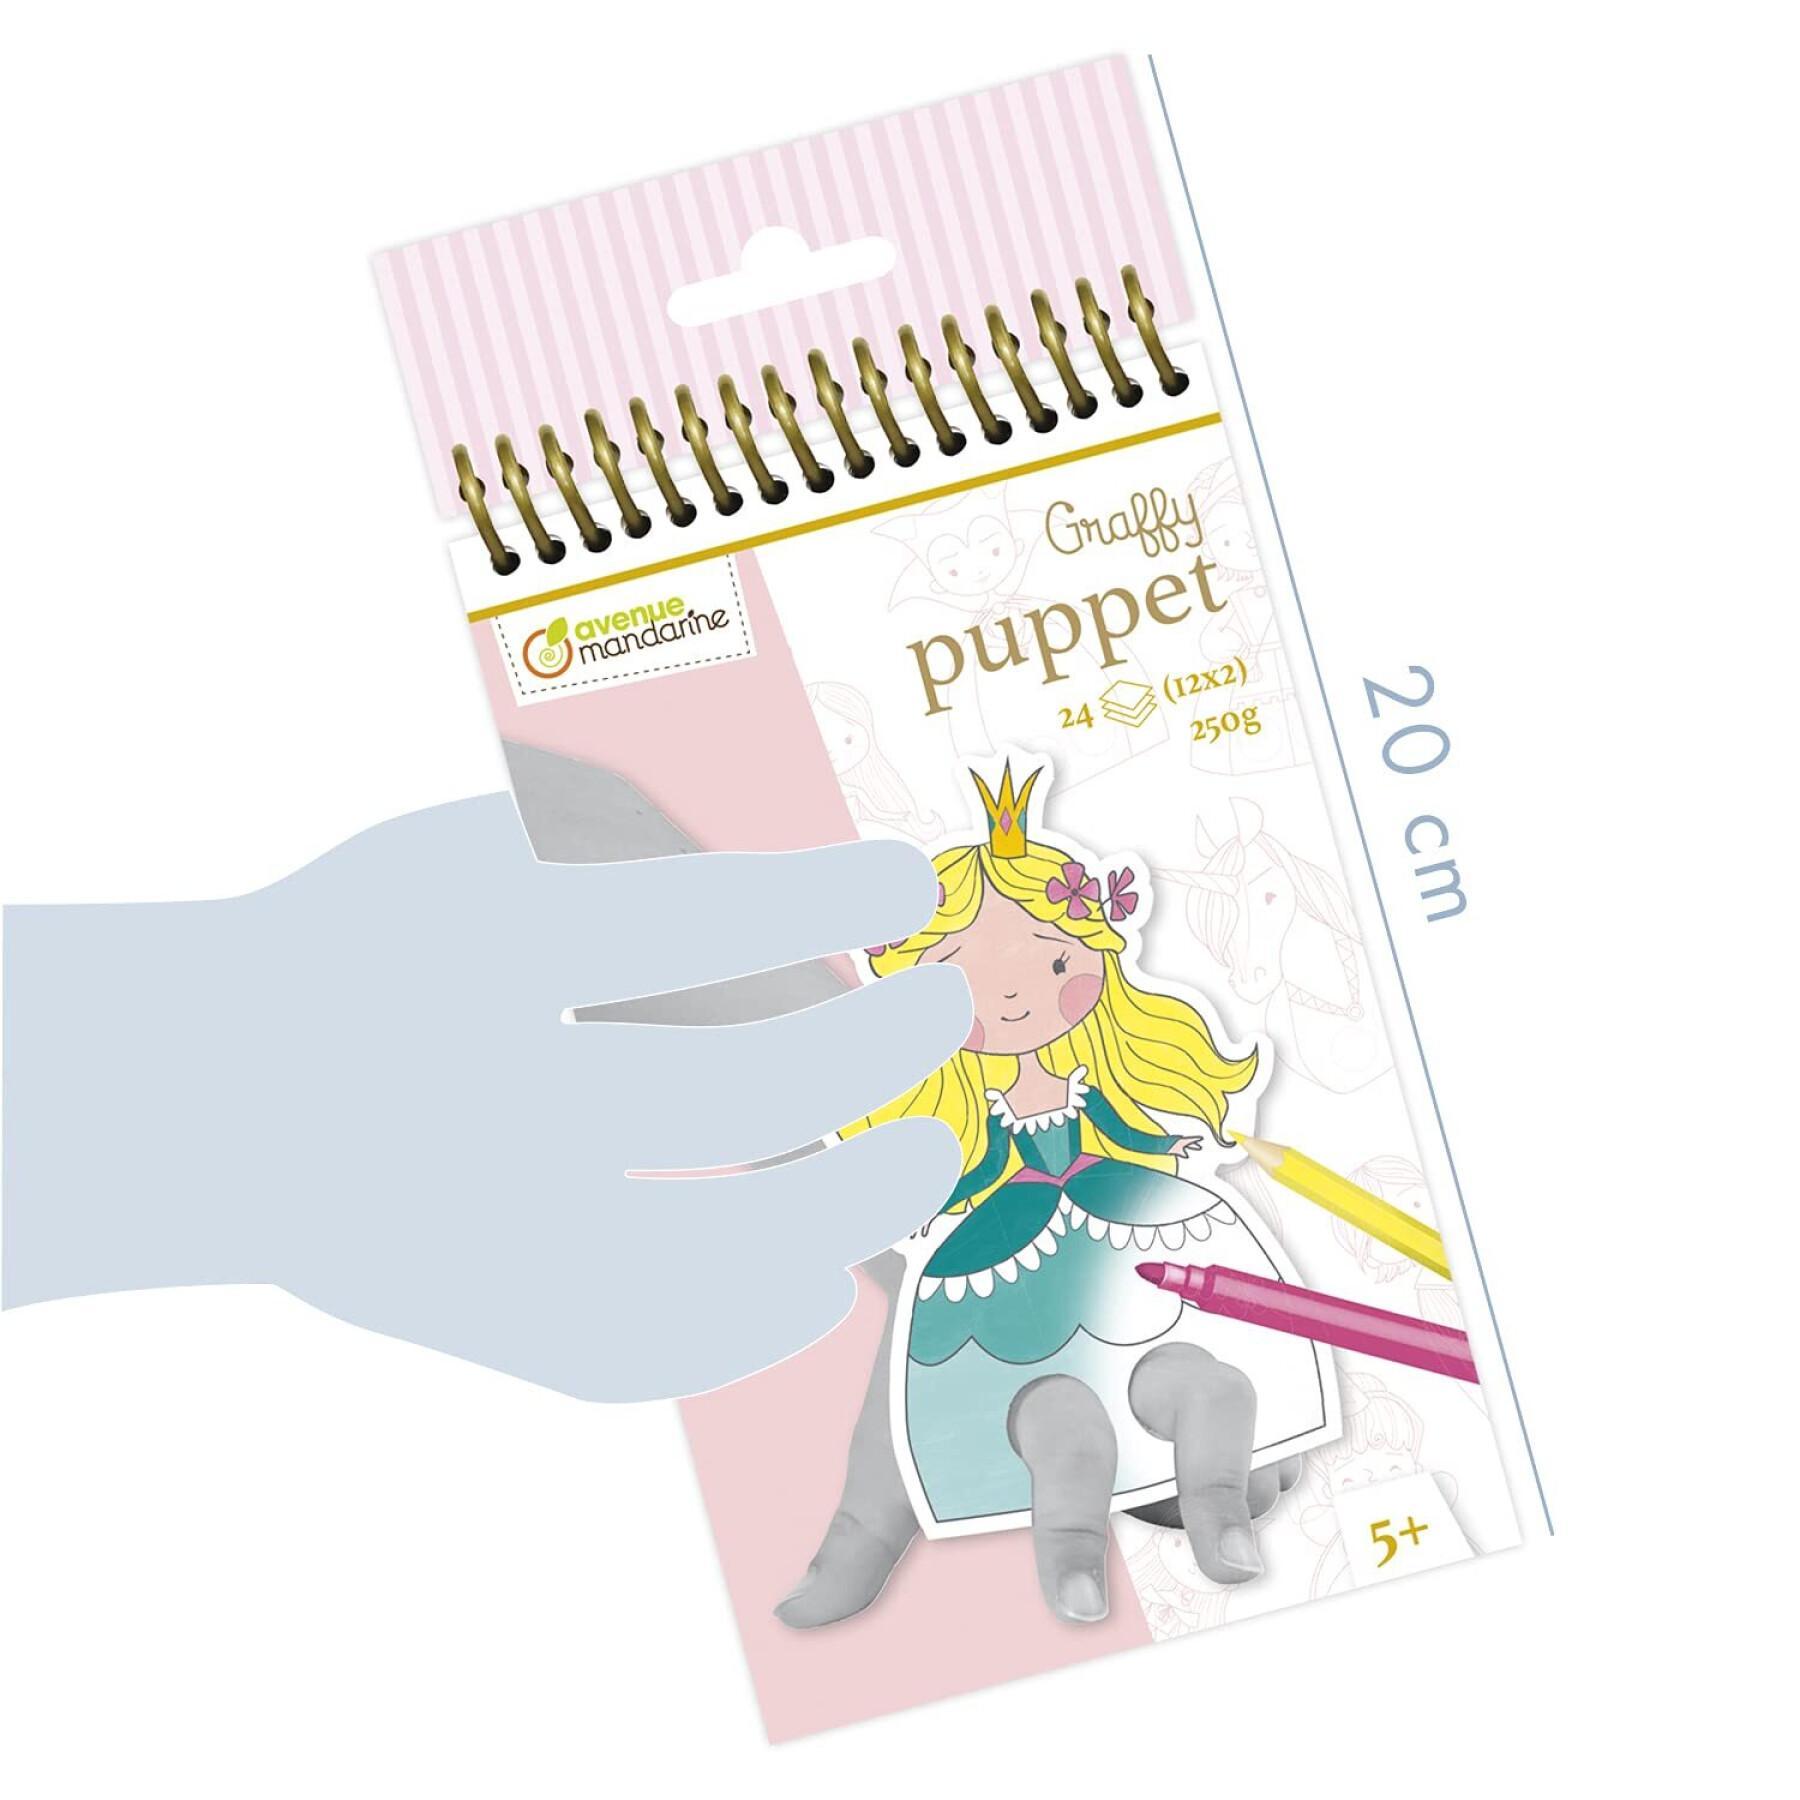 Klein boekje met 24 voorgeknipte vingerpoppetjes om in te kleuren Avenue Mandarine Graffy Puppet, Prince et Princesse